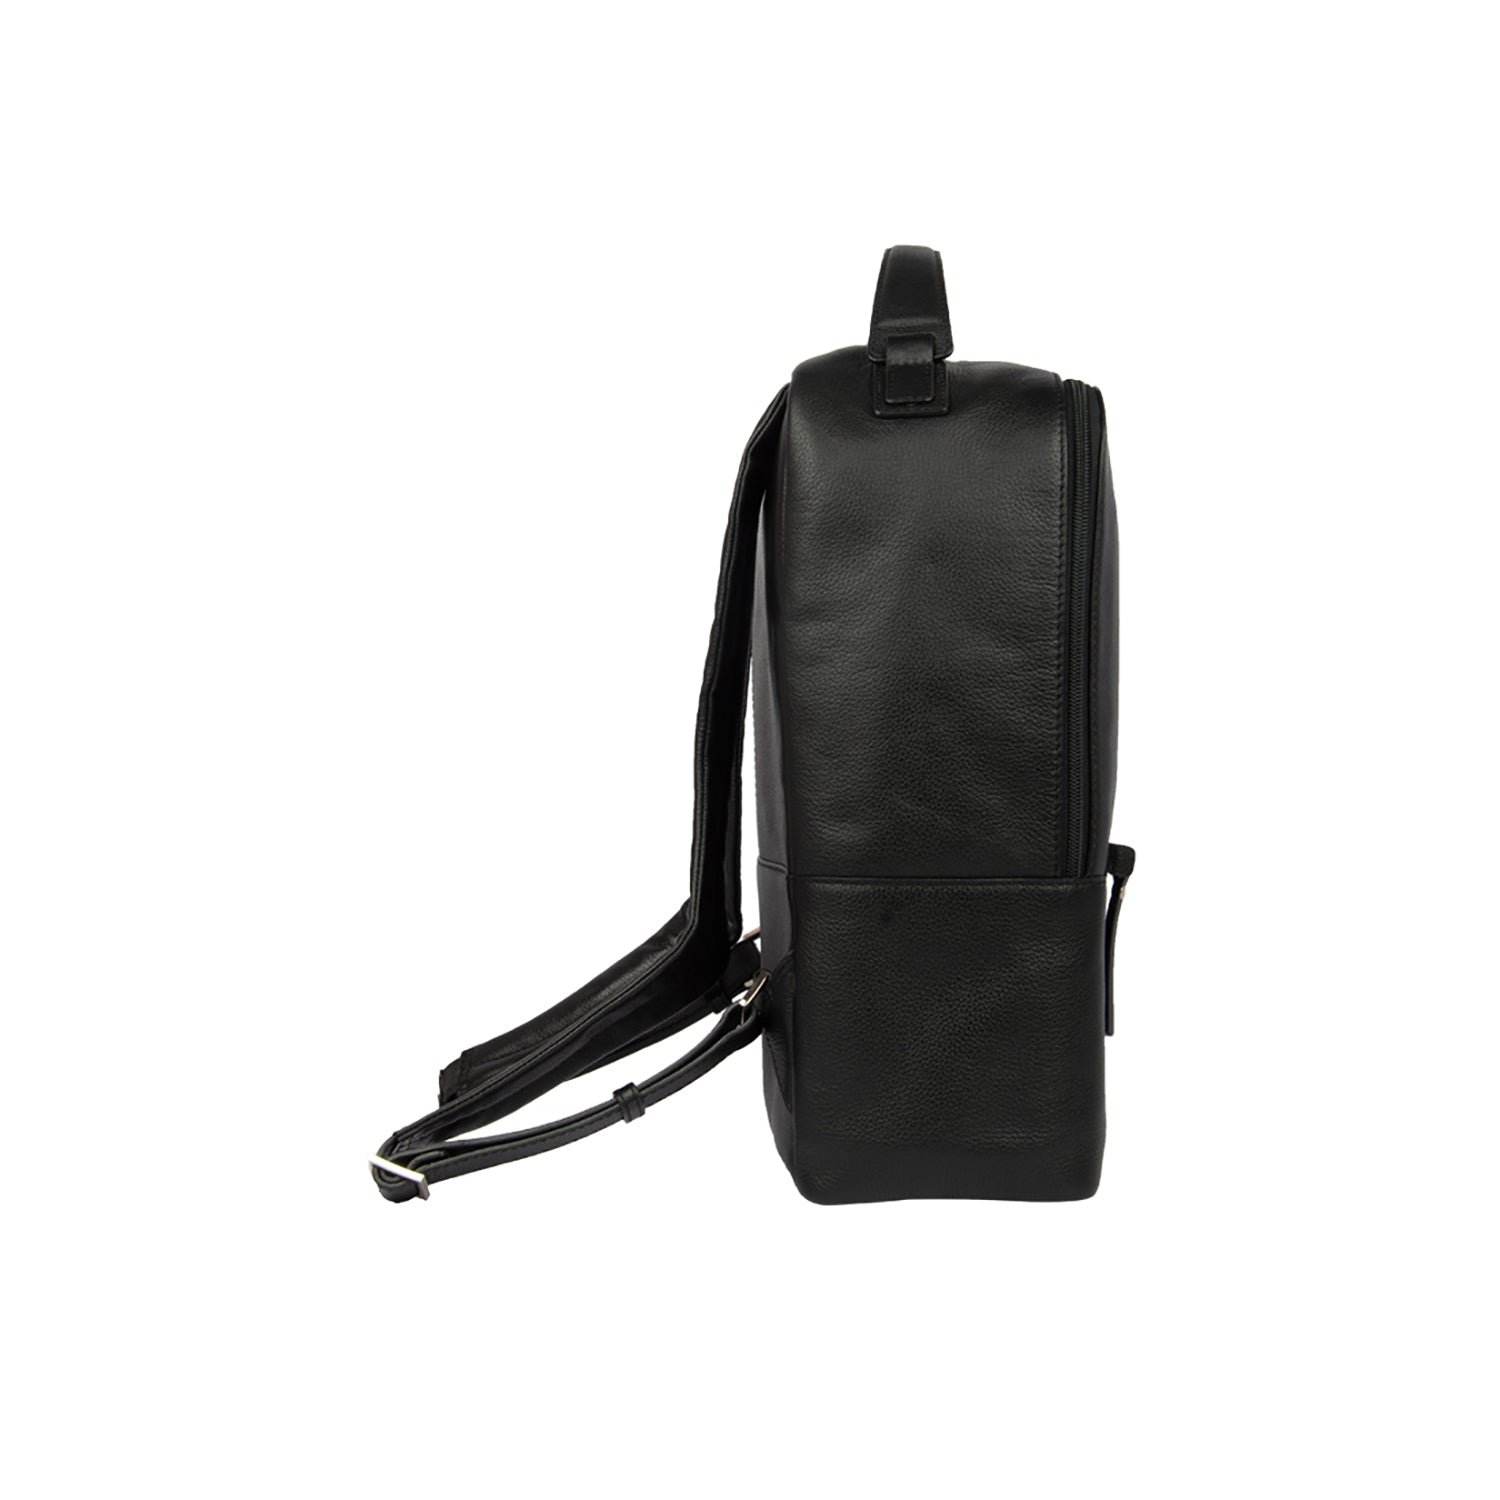 Bulchee Genuine  leather Backpack (Unisex) - MHBL907